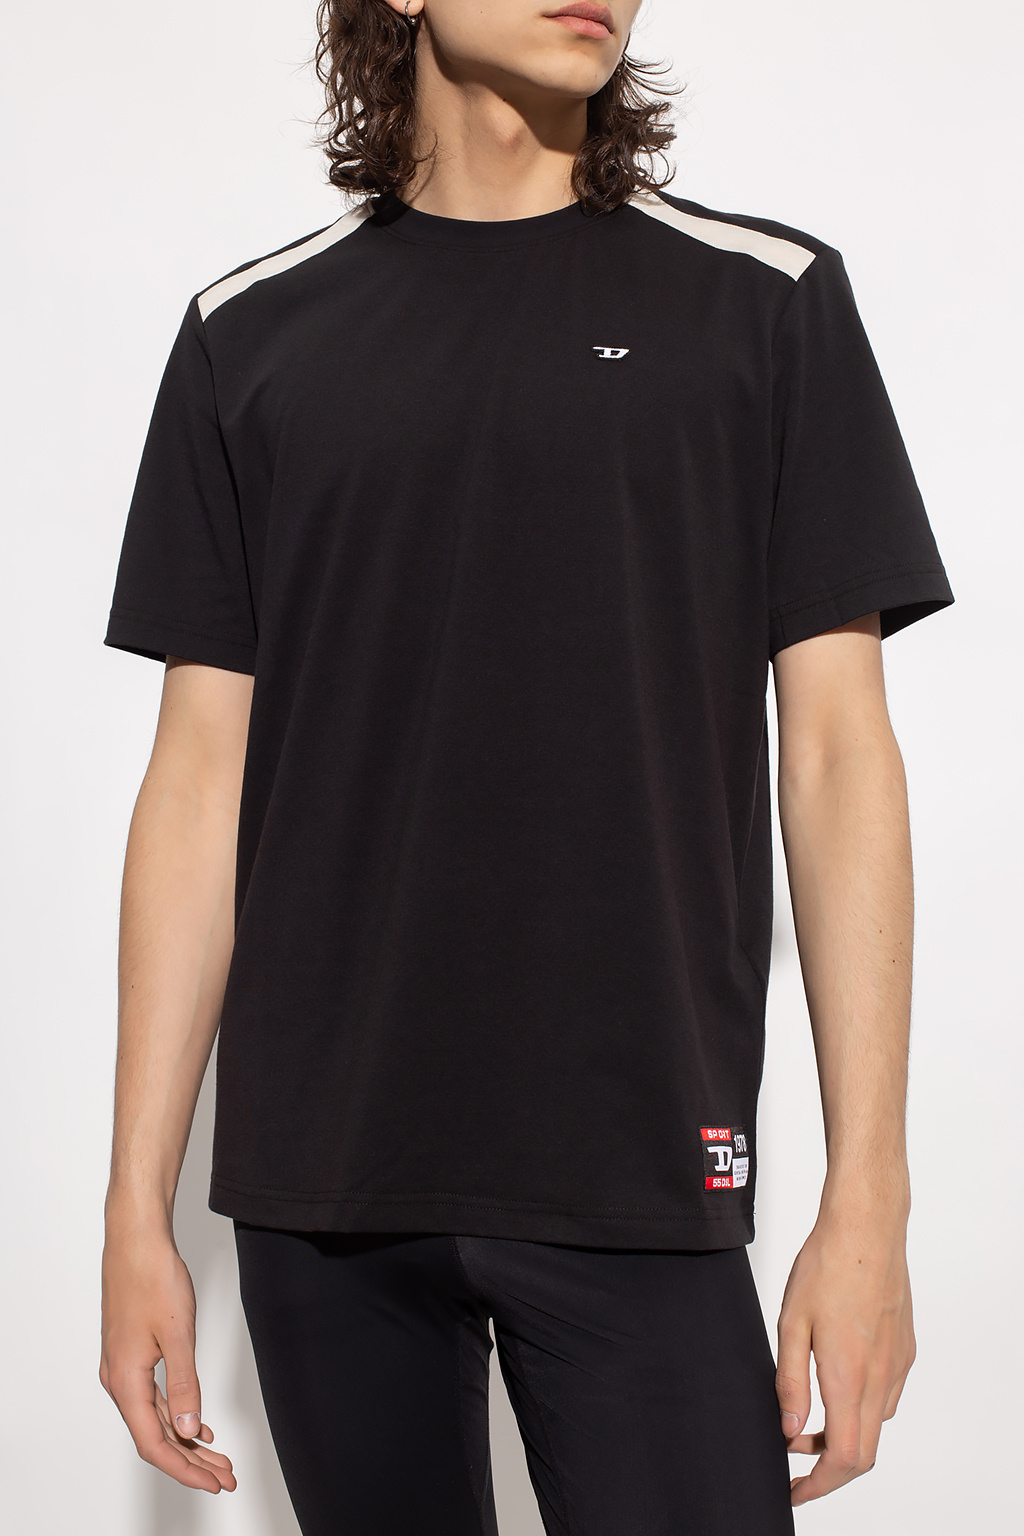 Black 'AMTEE - IetpShops GB - FREASTY - dorothee schumacher graphic print t  shirt item - HT04' T - shirt Diesel